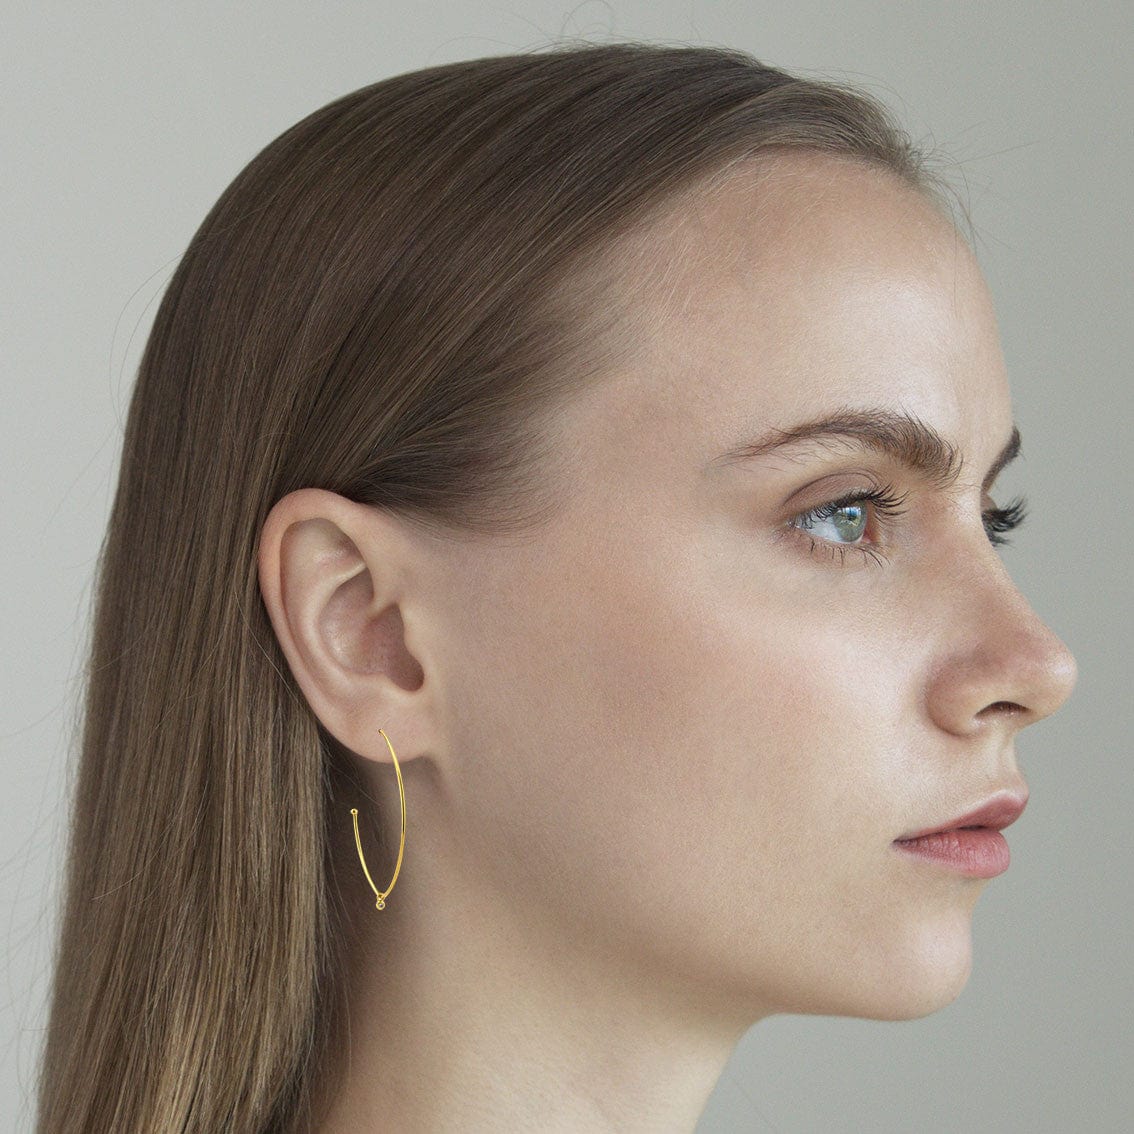 TAI JEWELRY Earrings Tear Shaped Hoop Earrings With Small Cz Charm